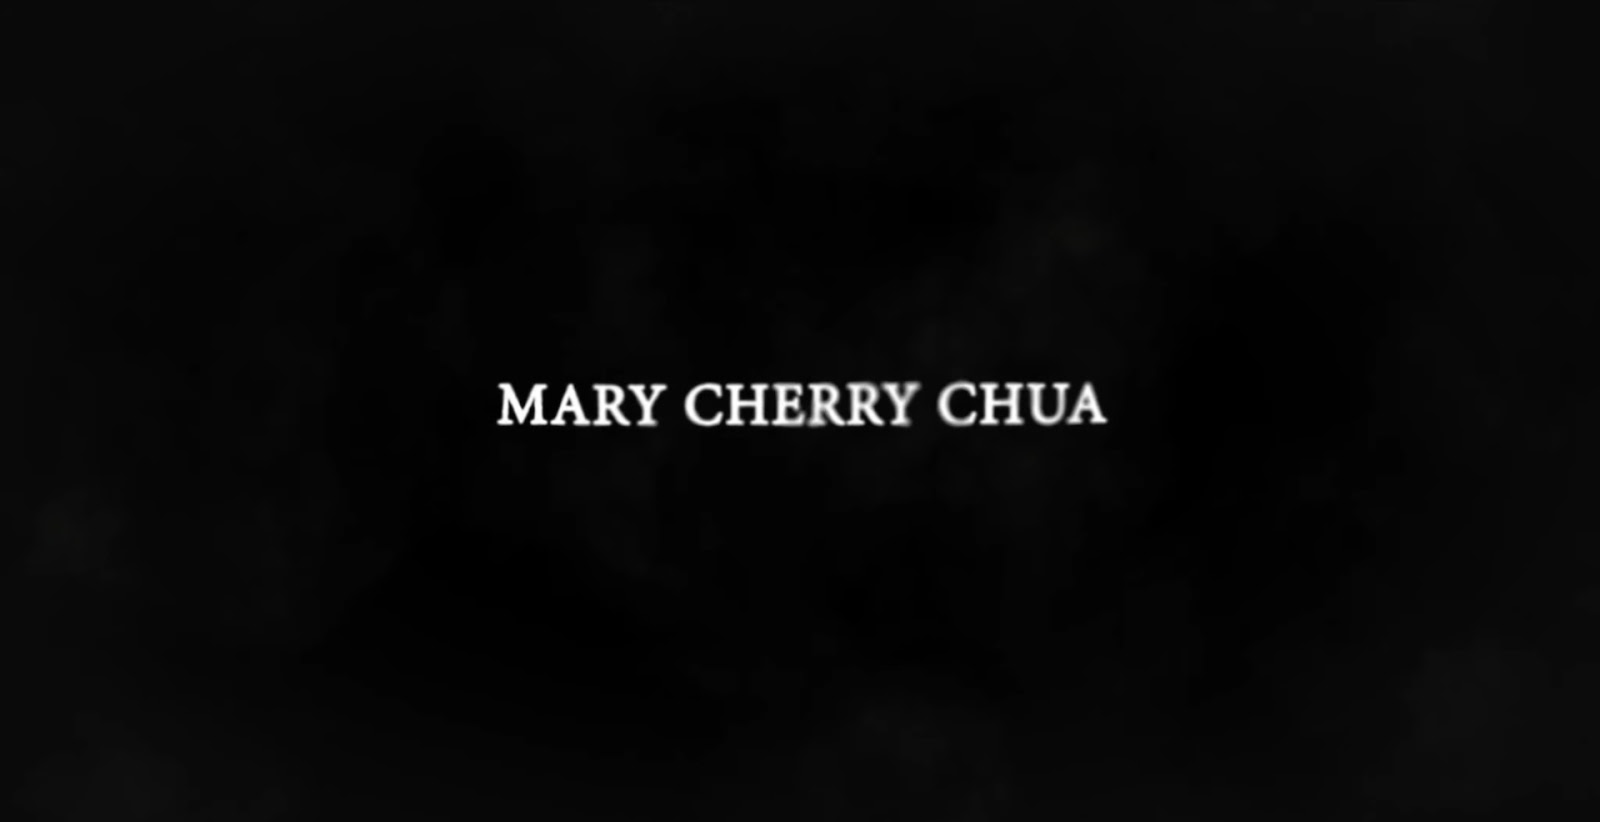 Mary Cherry Chua 2023 produced by Viva Films written and directed by  Roni Benaid starring Abby Bautista, Kokoy de Santos, Lyca Gairanod, Krissha Viaje, Ashley Diaz showing July 19, 2023